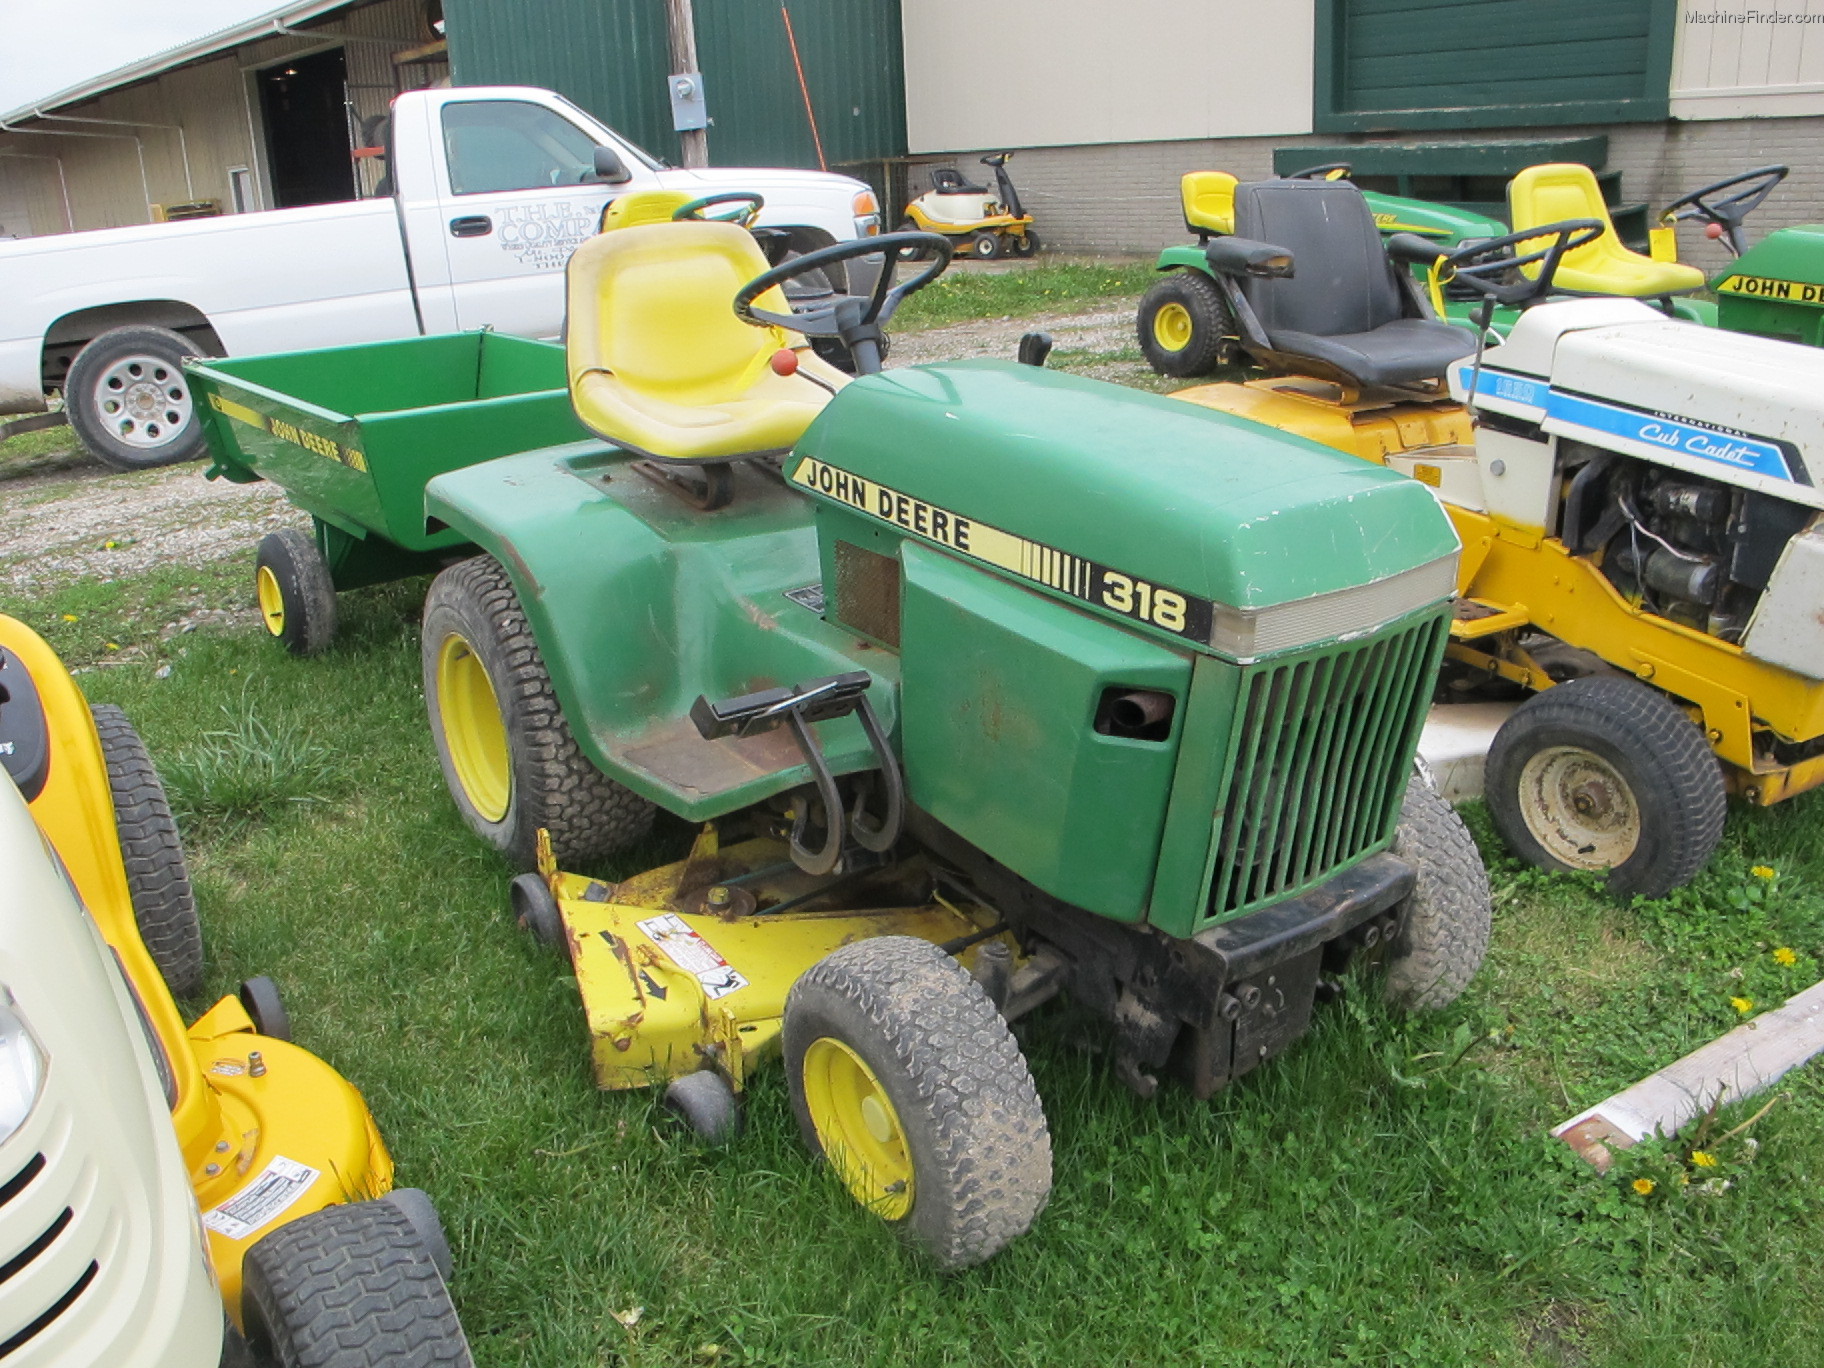 John deere 445 lawn tractor manual: software free download